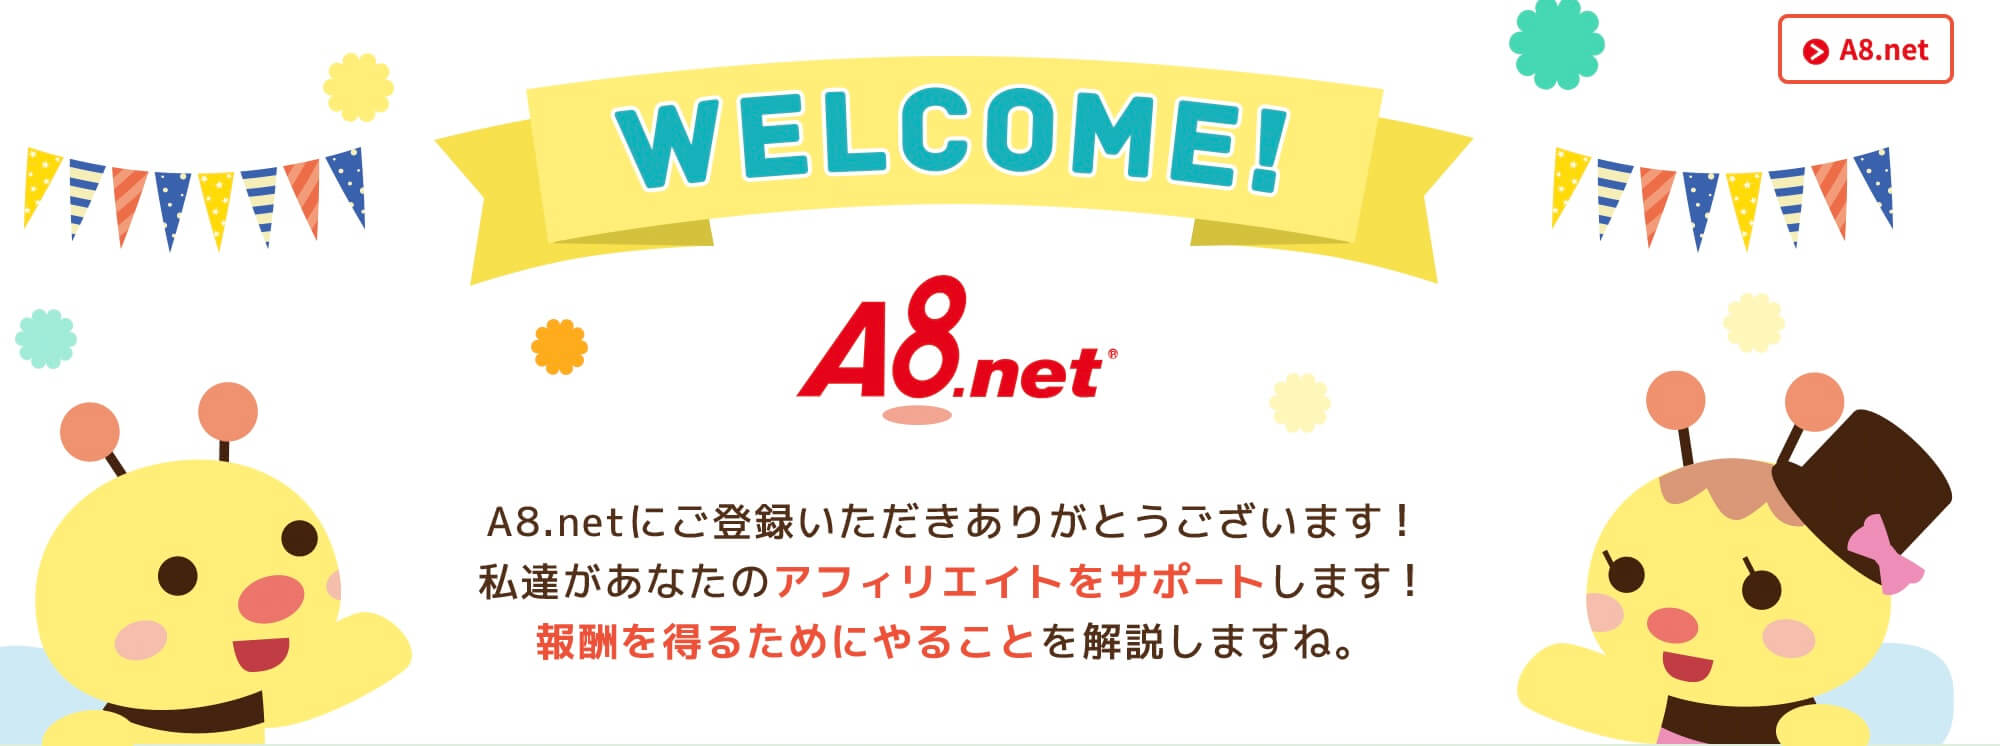 A8.netの公式サイトの画像